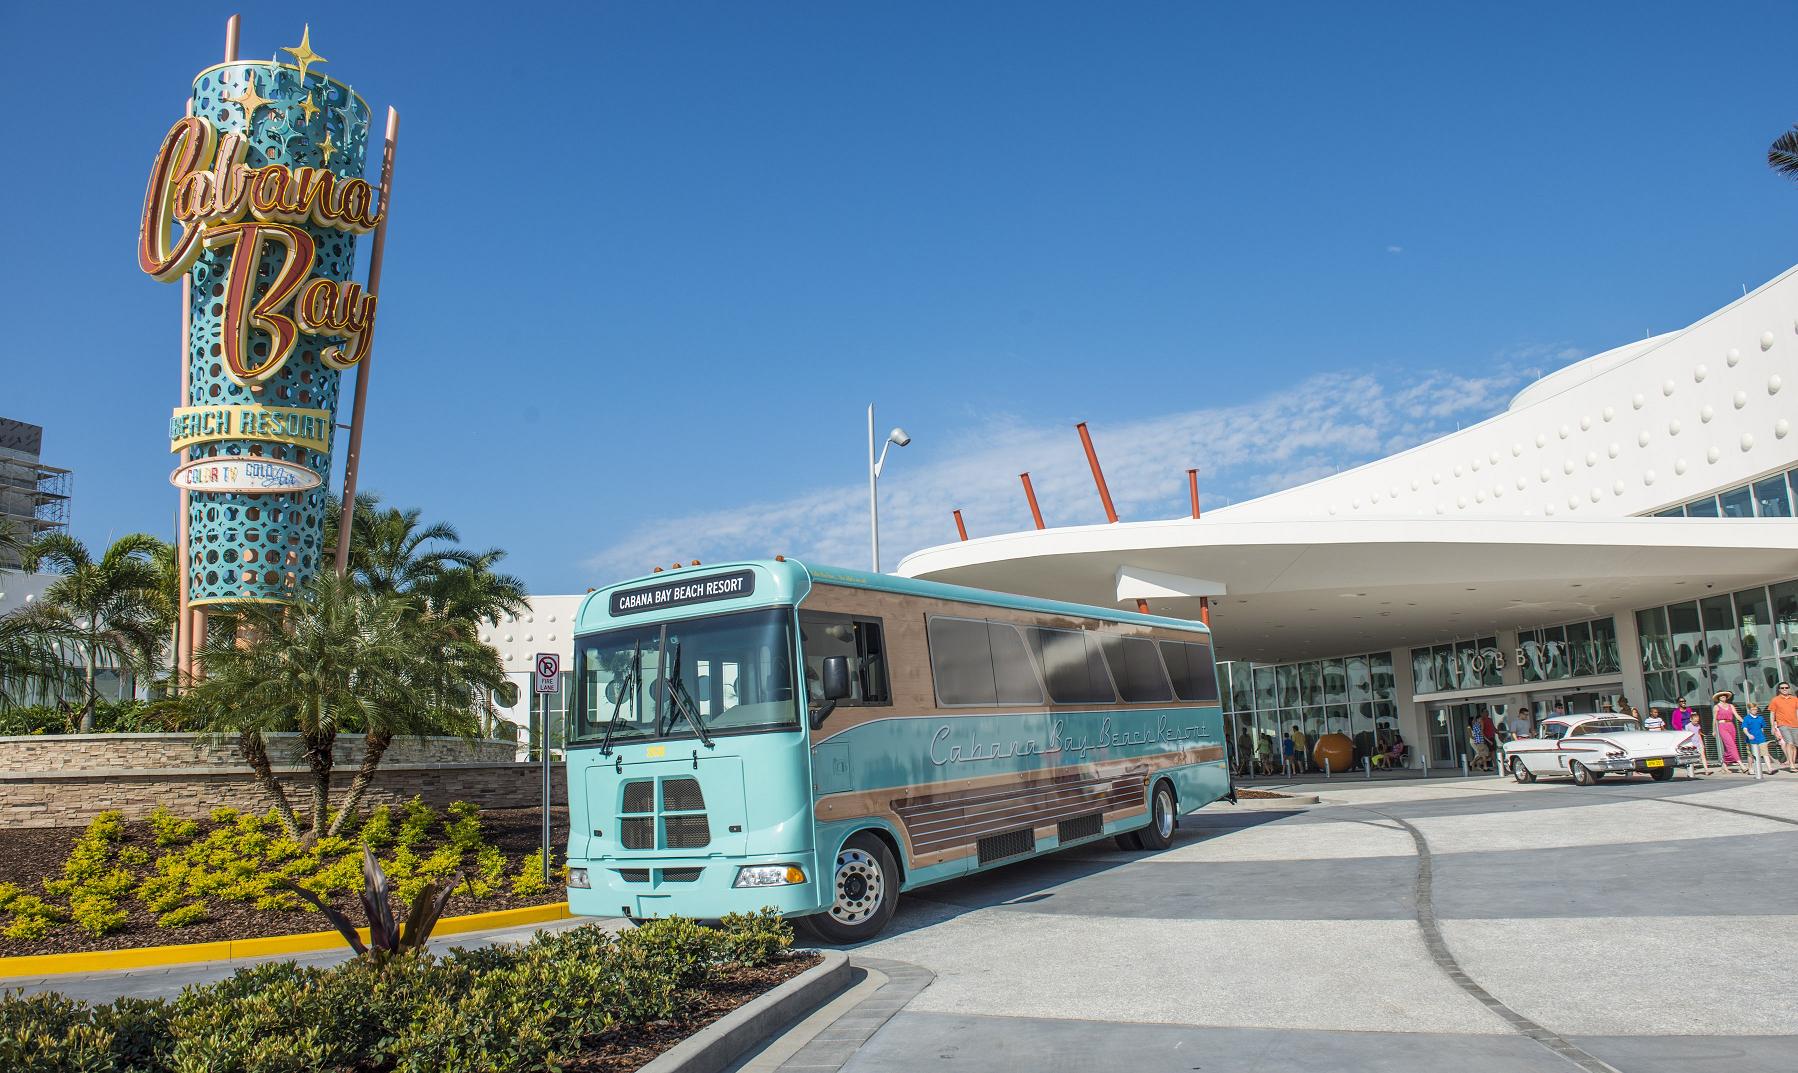 Cabana Bay Beach Resort now open at Universal Orlando